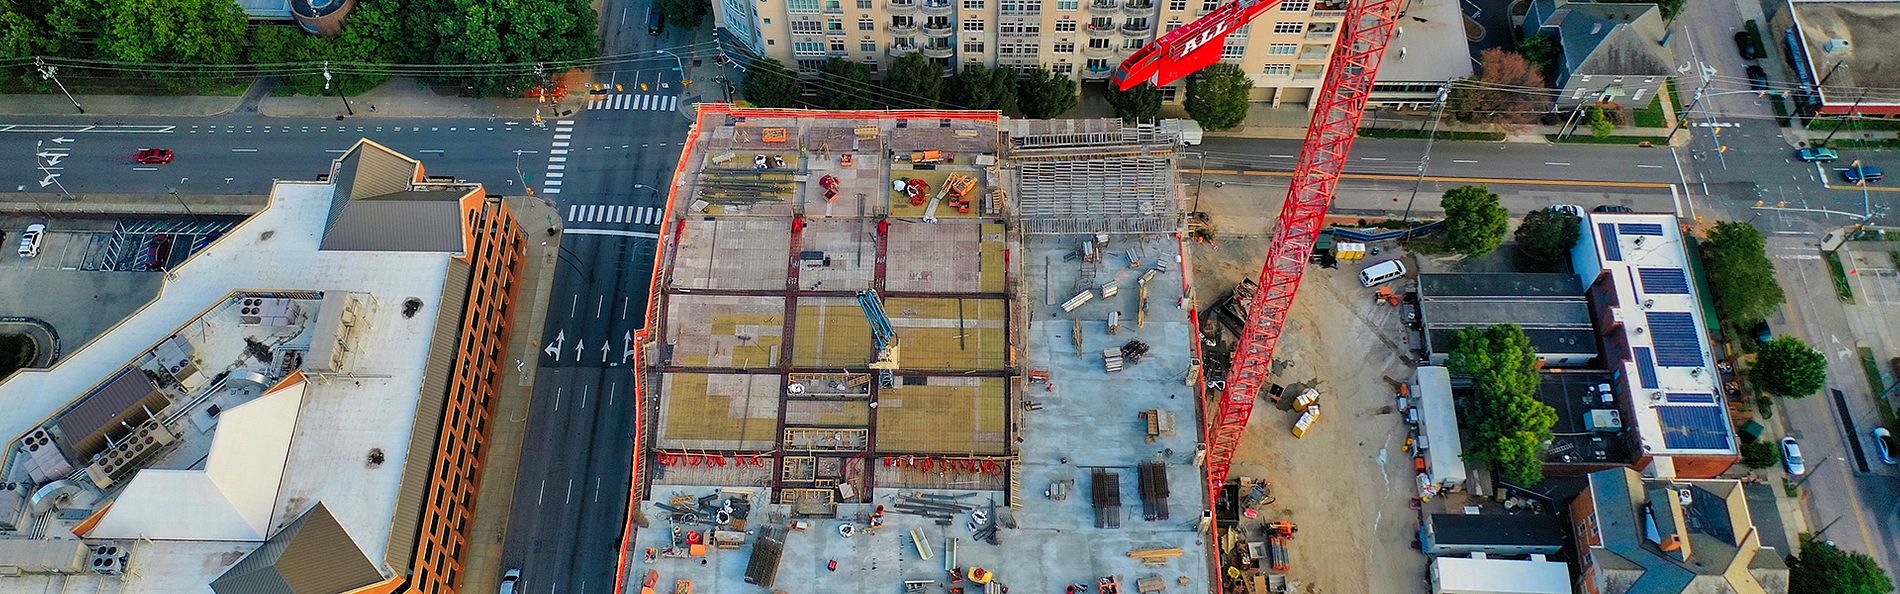 301 Hillsborough Office Building Drone Photo under construction - June 2020